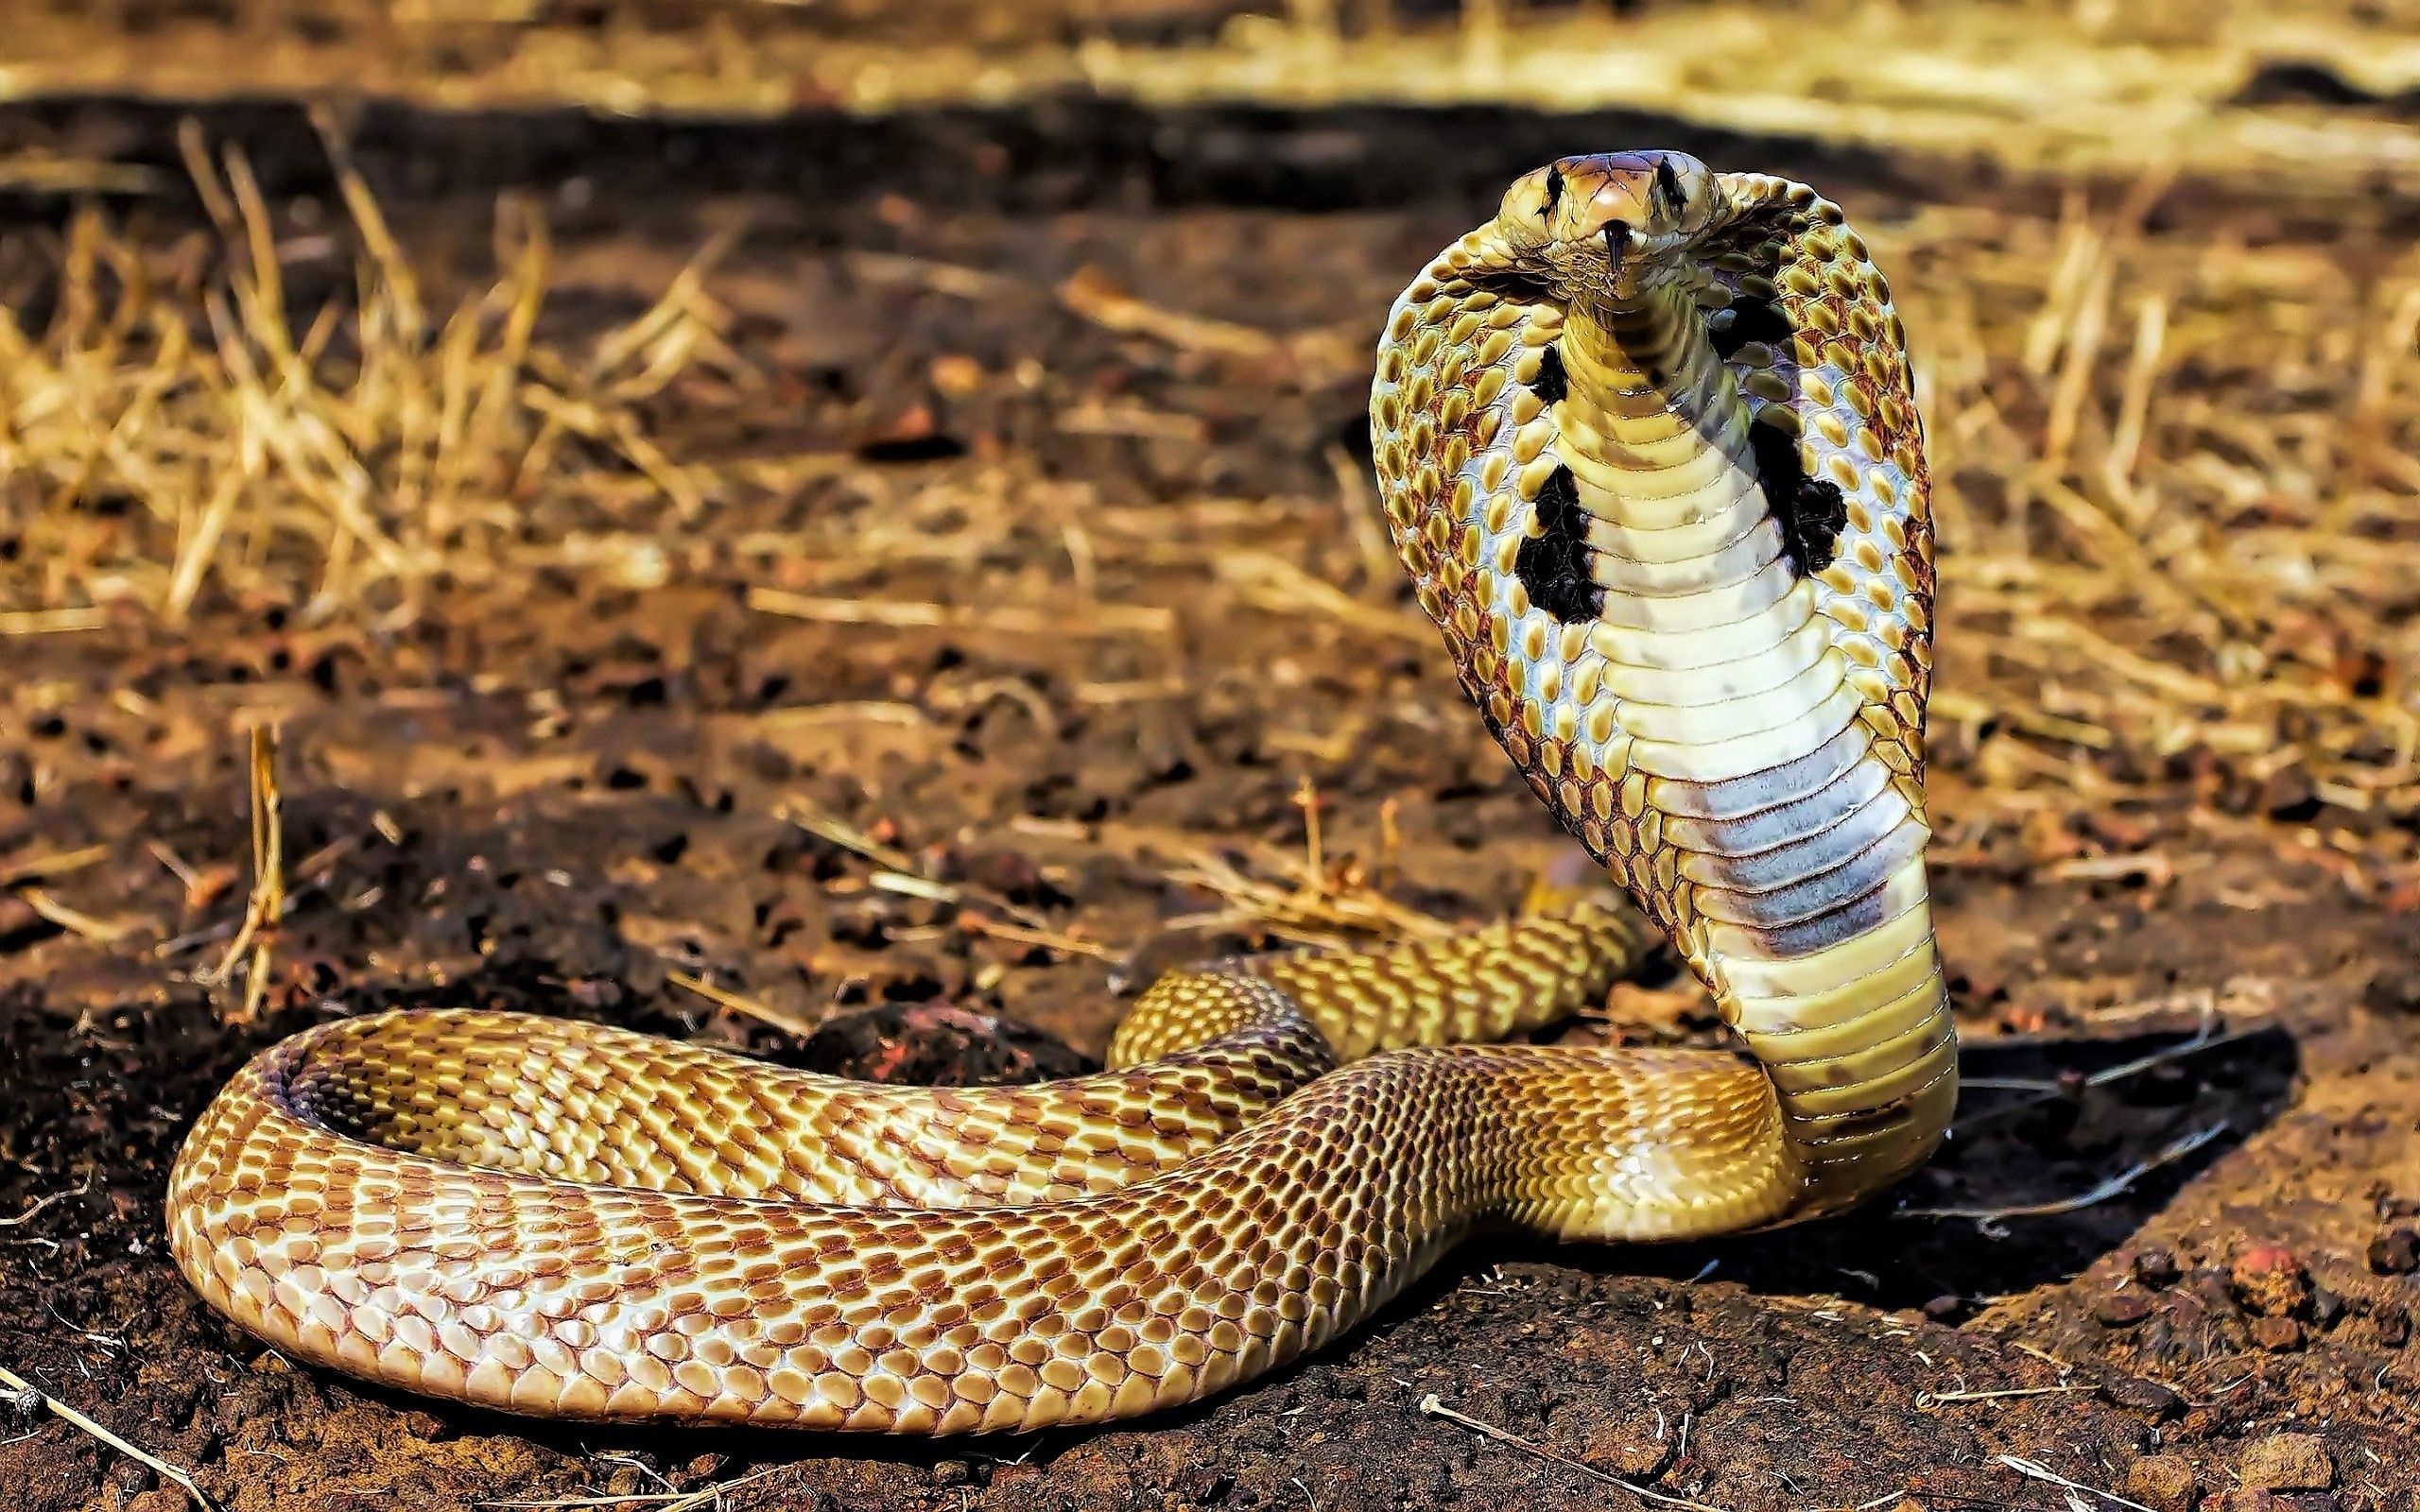 King Cobra visuals, Captivating snake photography, HD wallpapers, Wildlife fascination, 2560x1600 HD Desktop